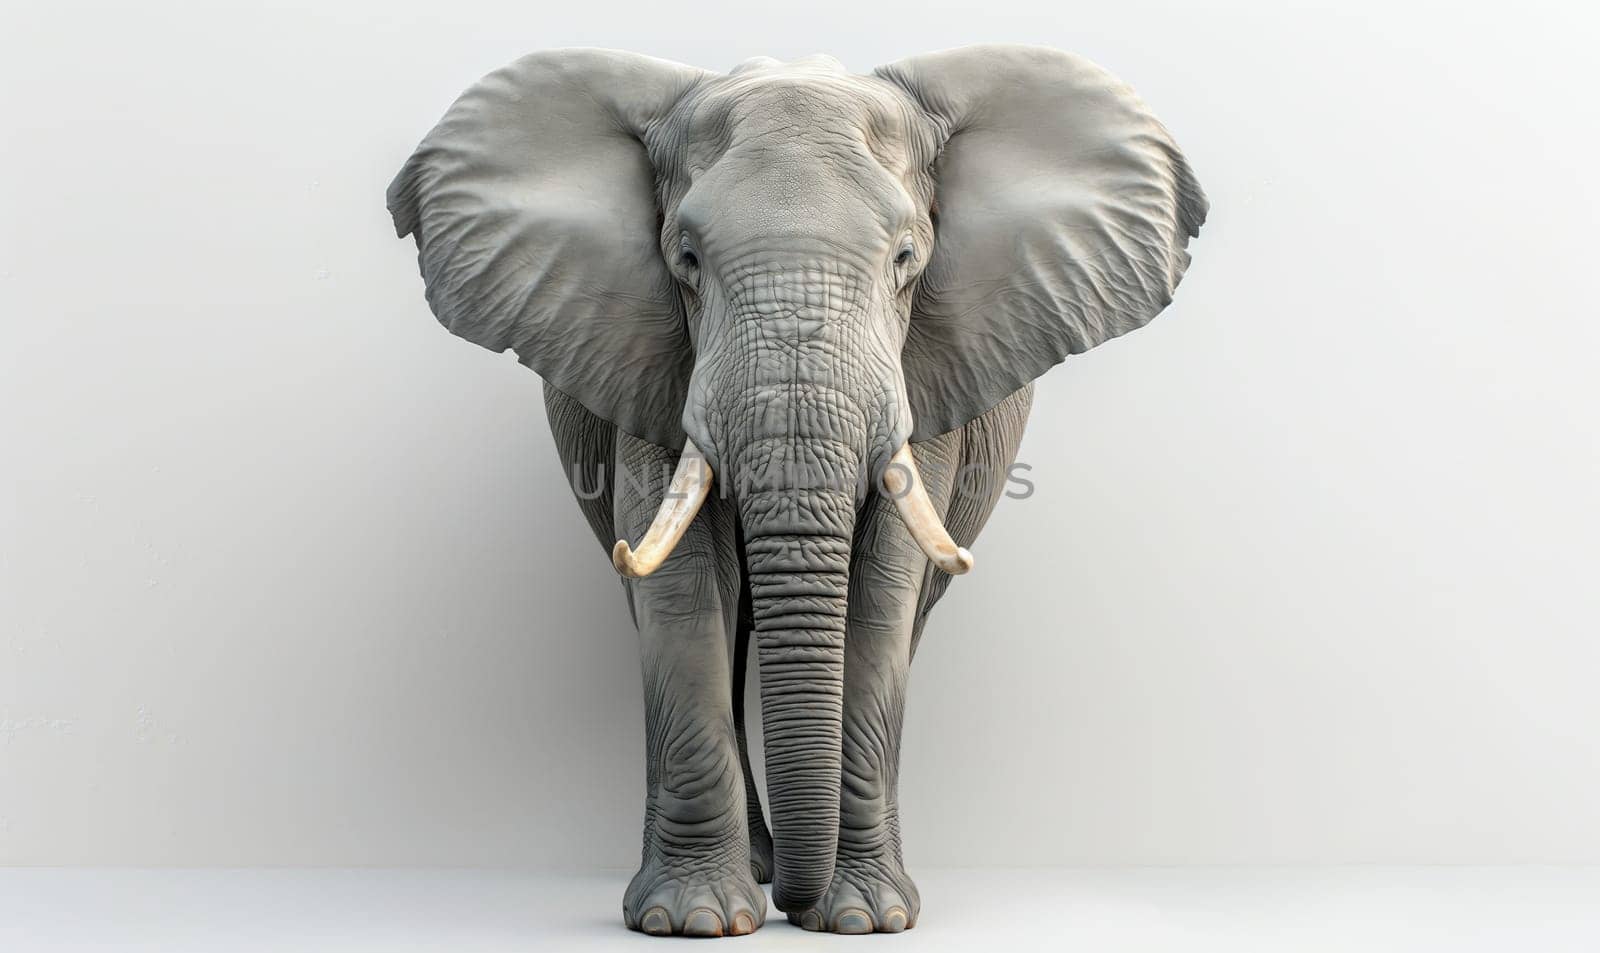 Majestic Elephant in Monochrome. Selective focus